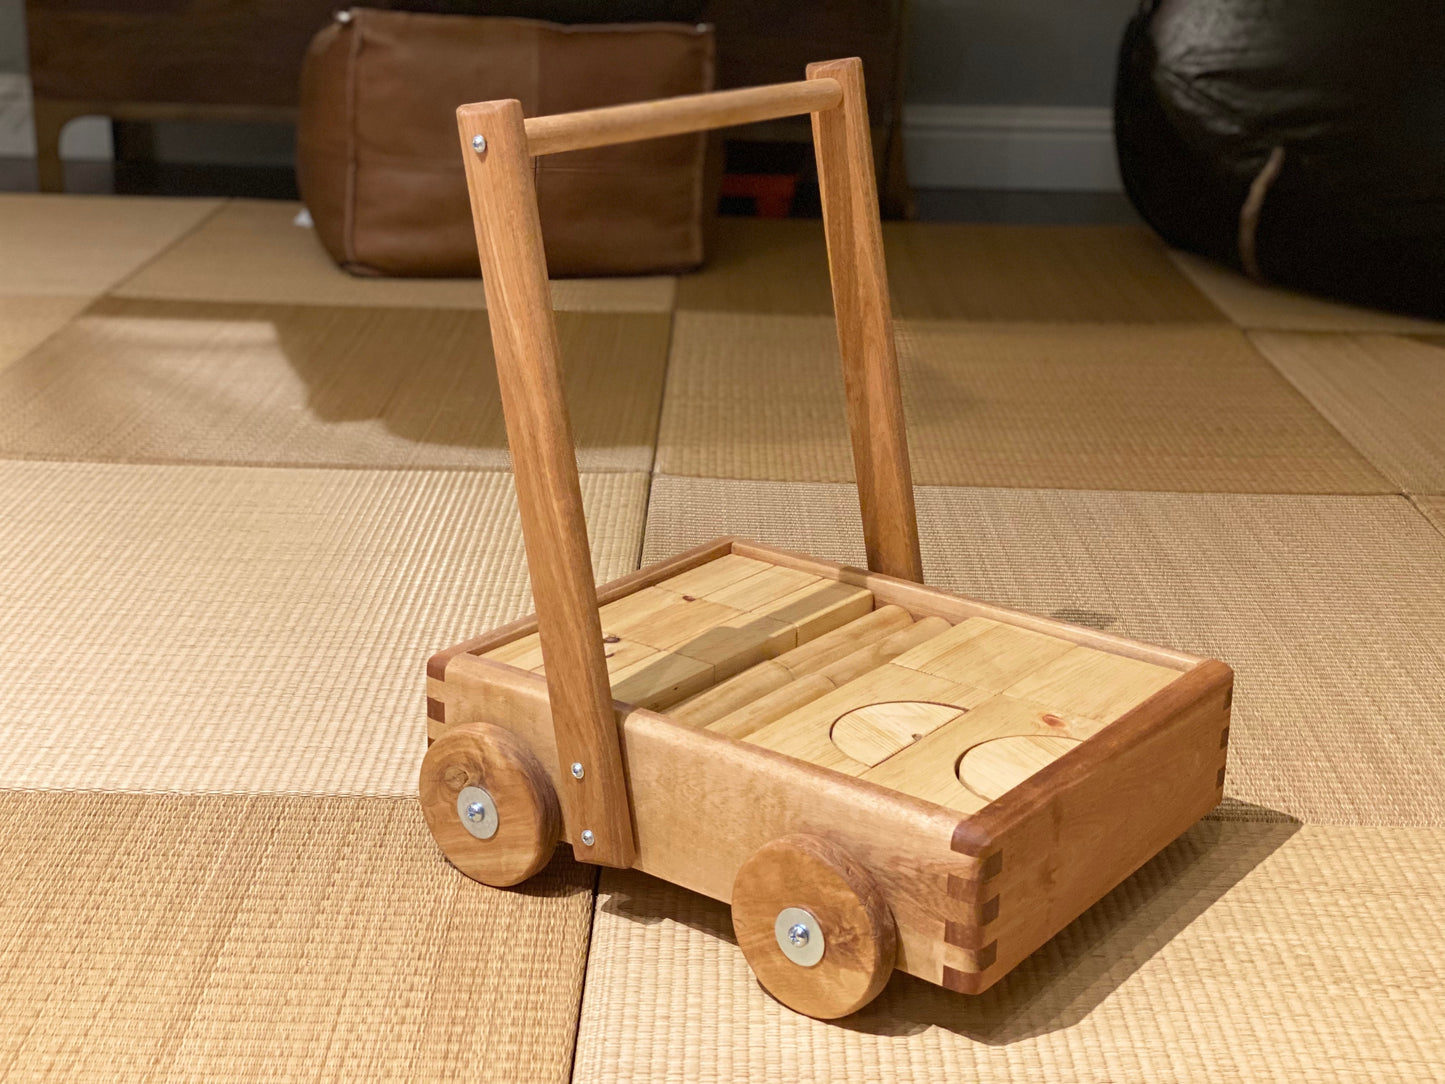 Toddler cart and blocks